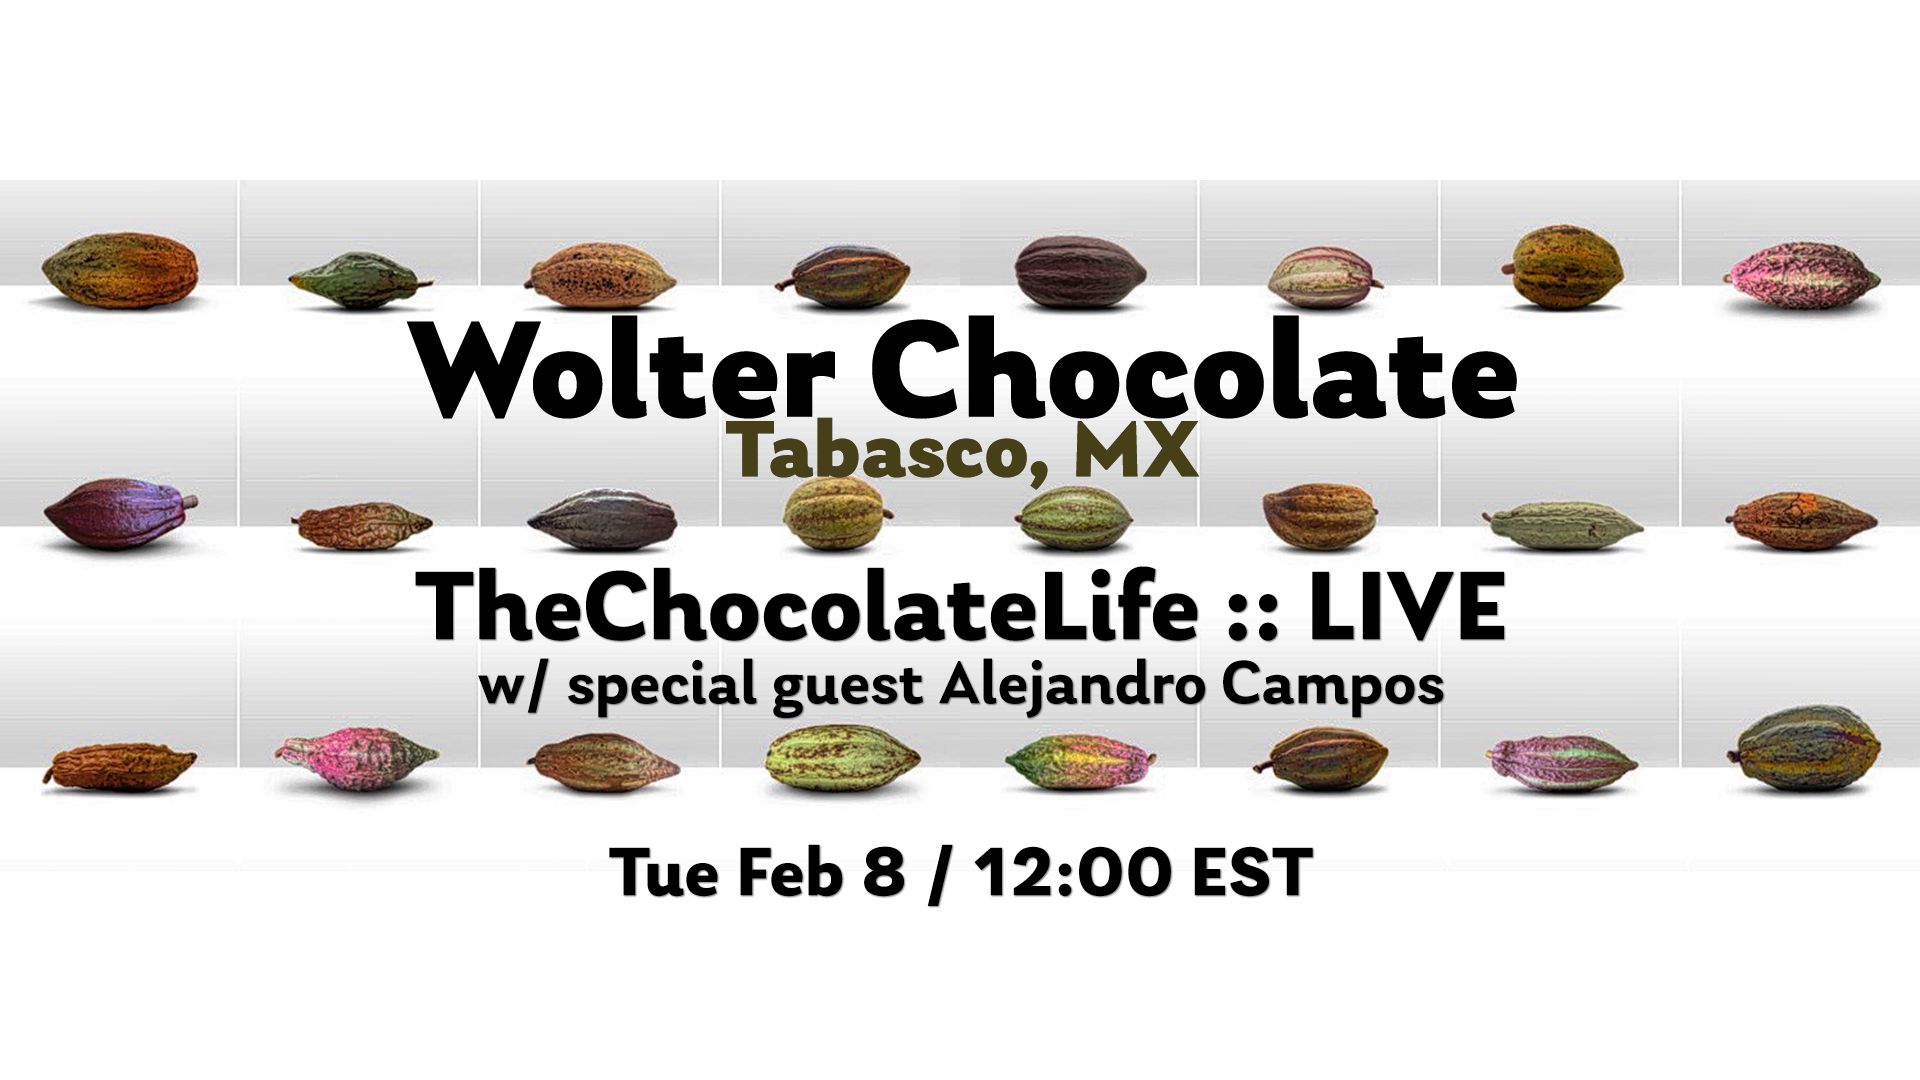 TheChocolateLife :: LIVE – Wolter Chocolates, Tabasco, MX